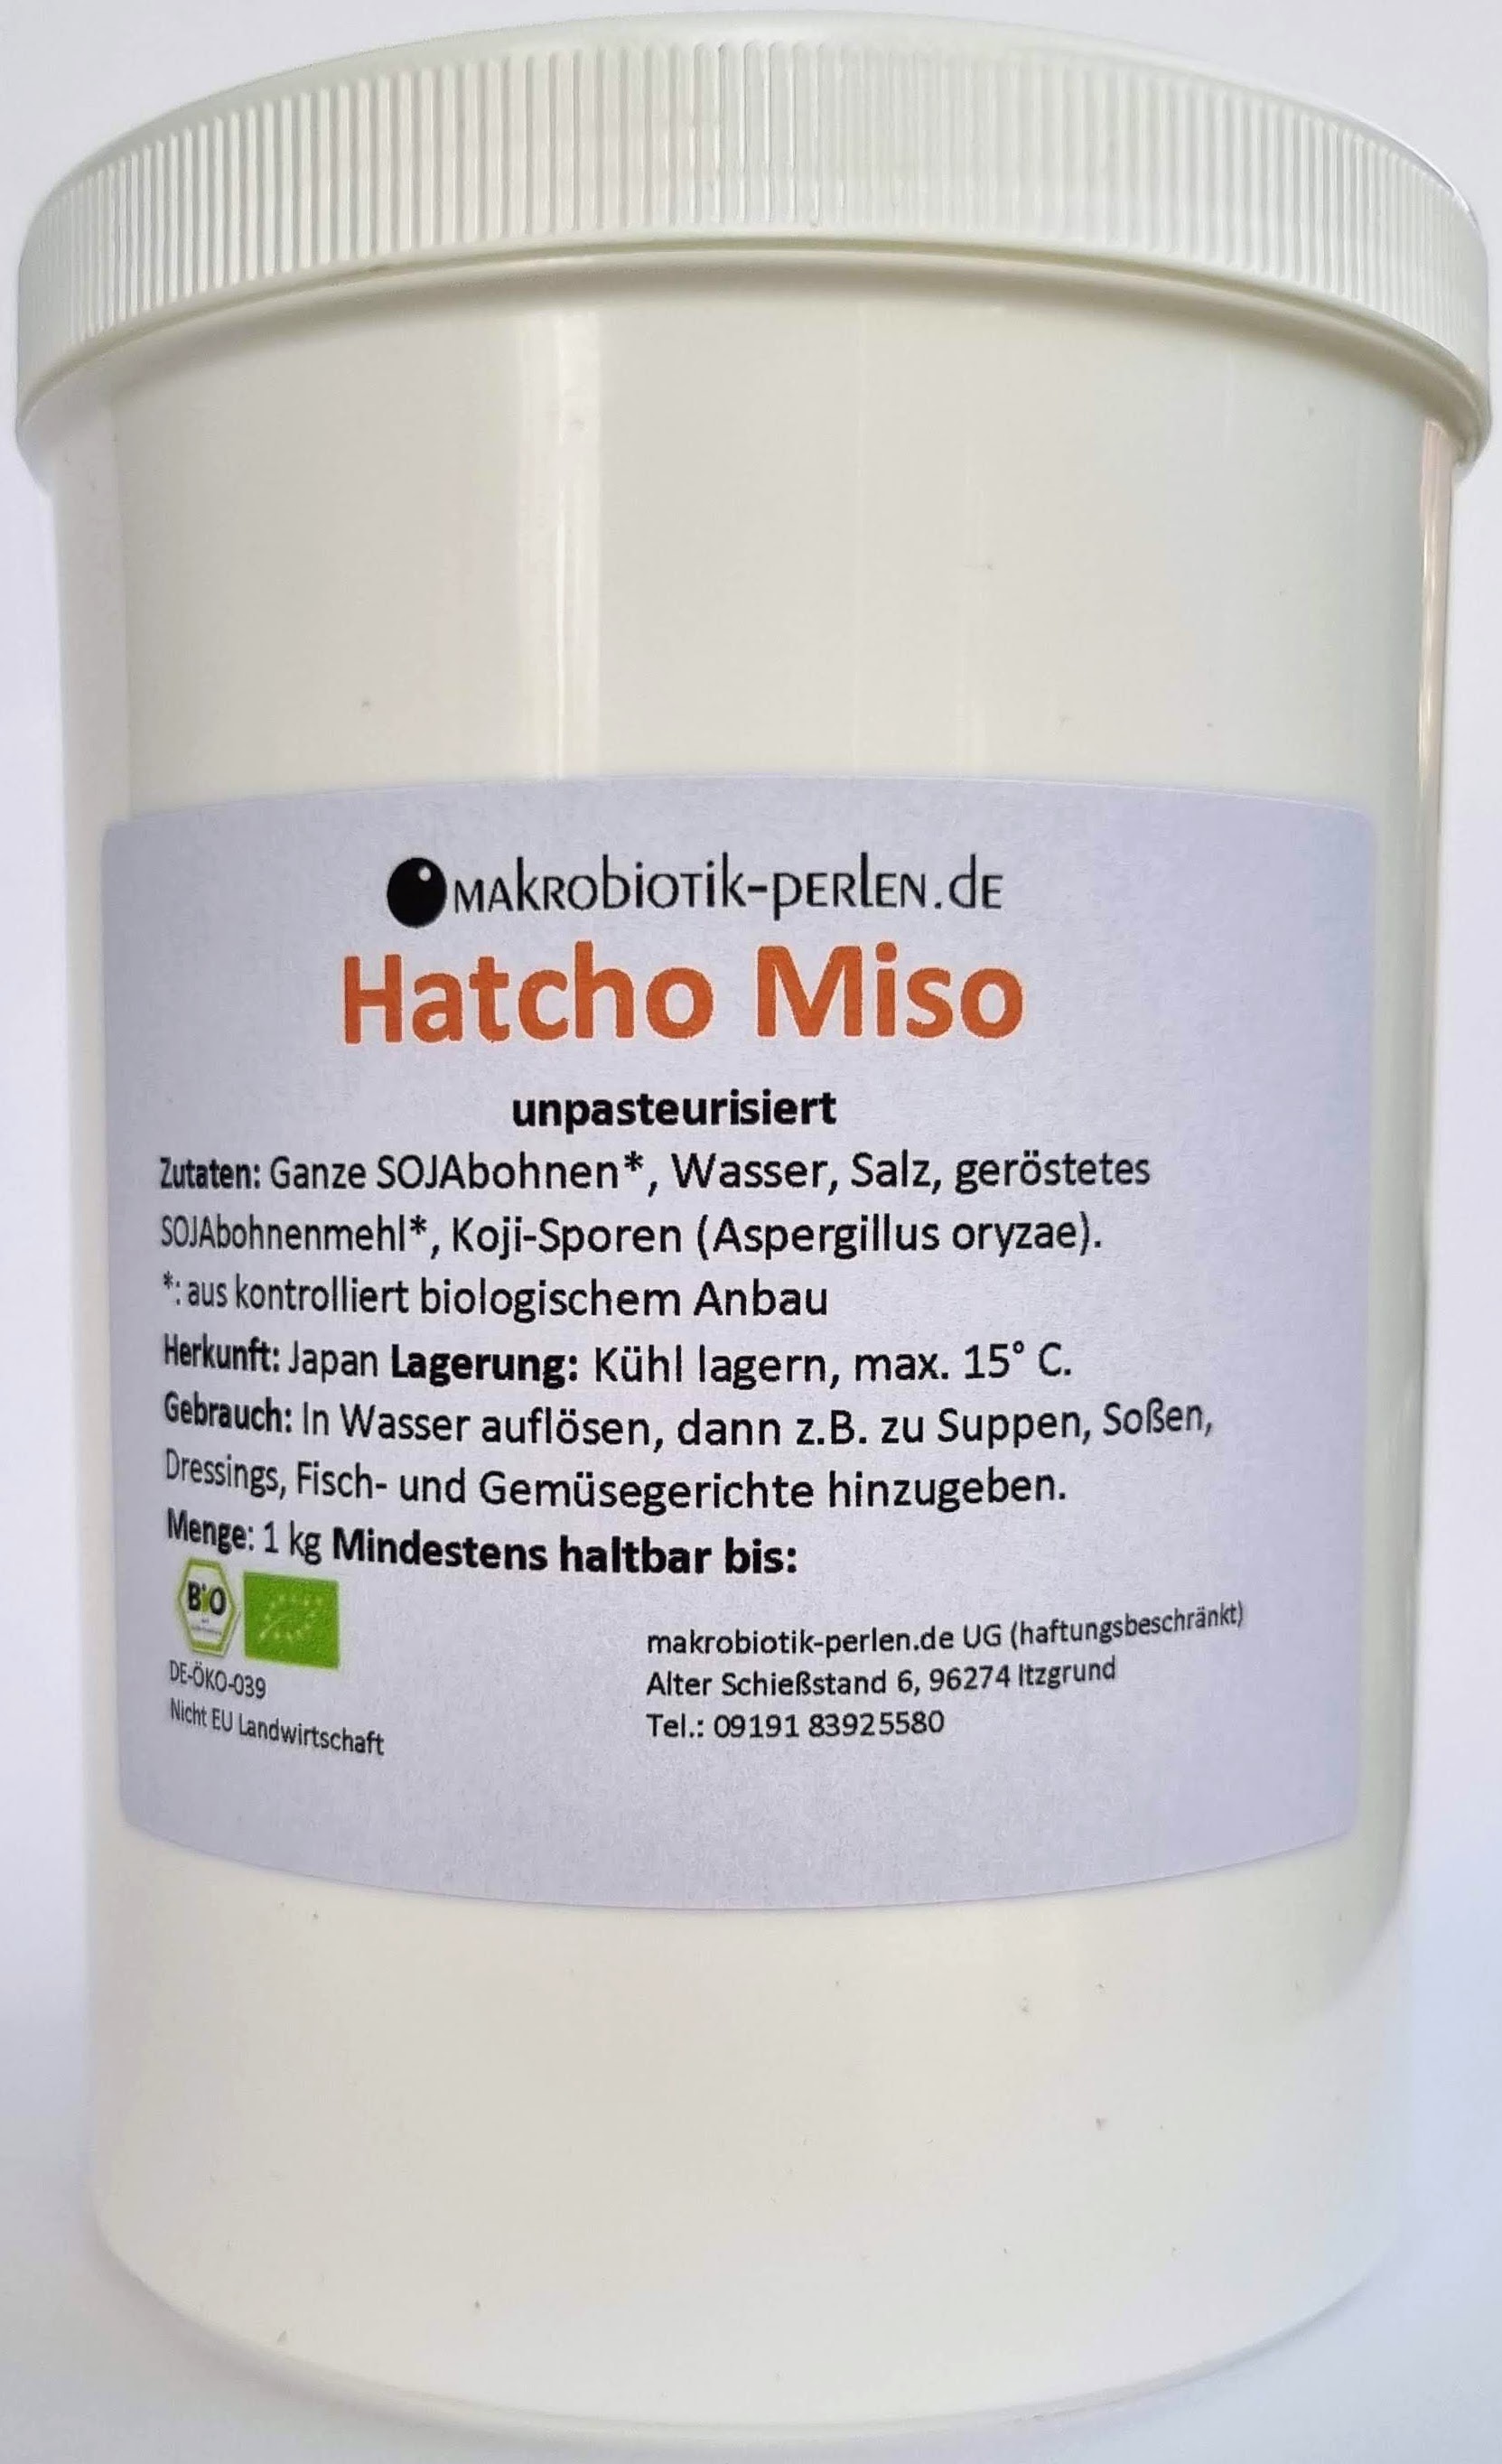 Hatcho Miso (unpasteurisiert)